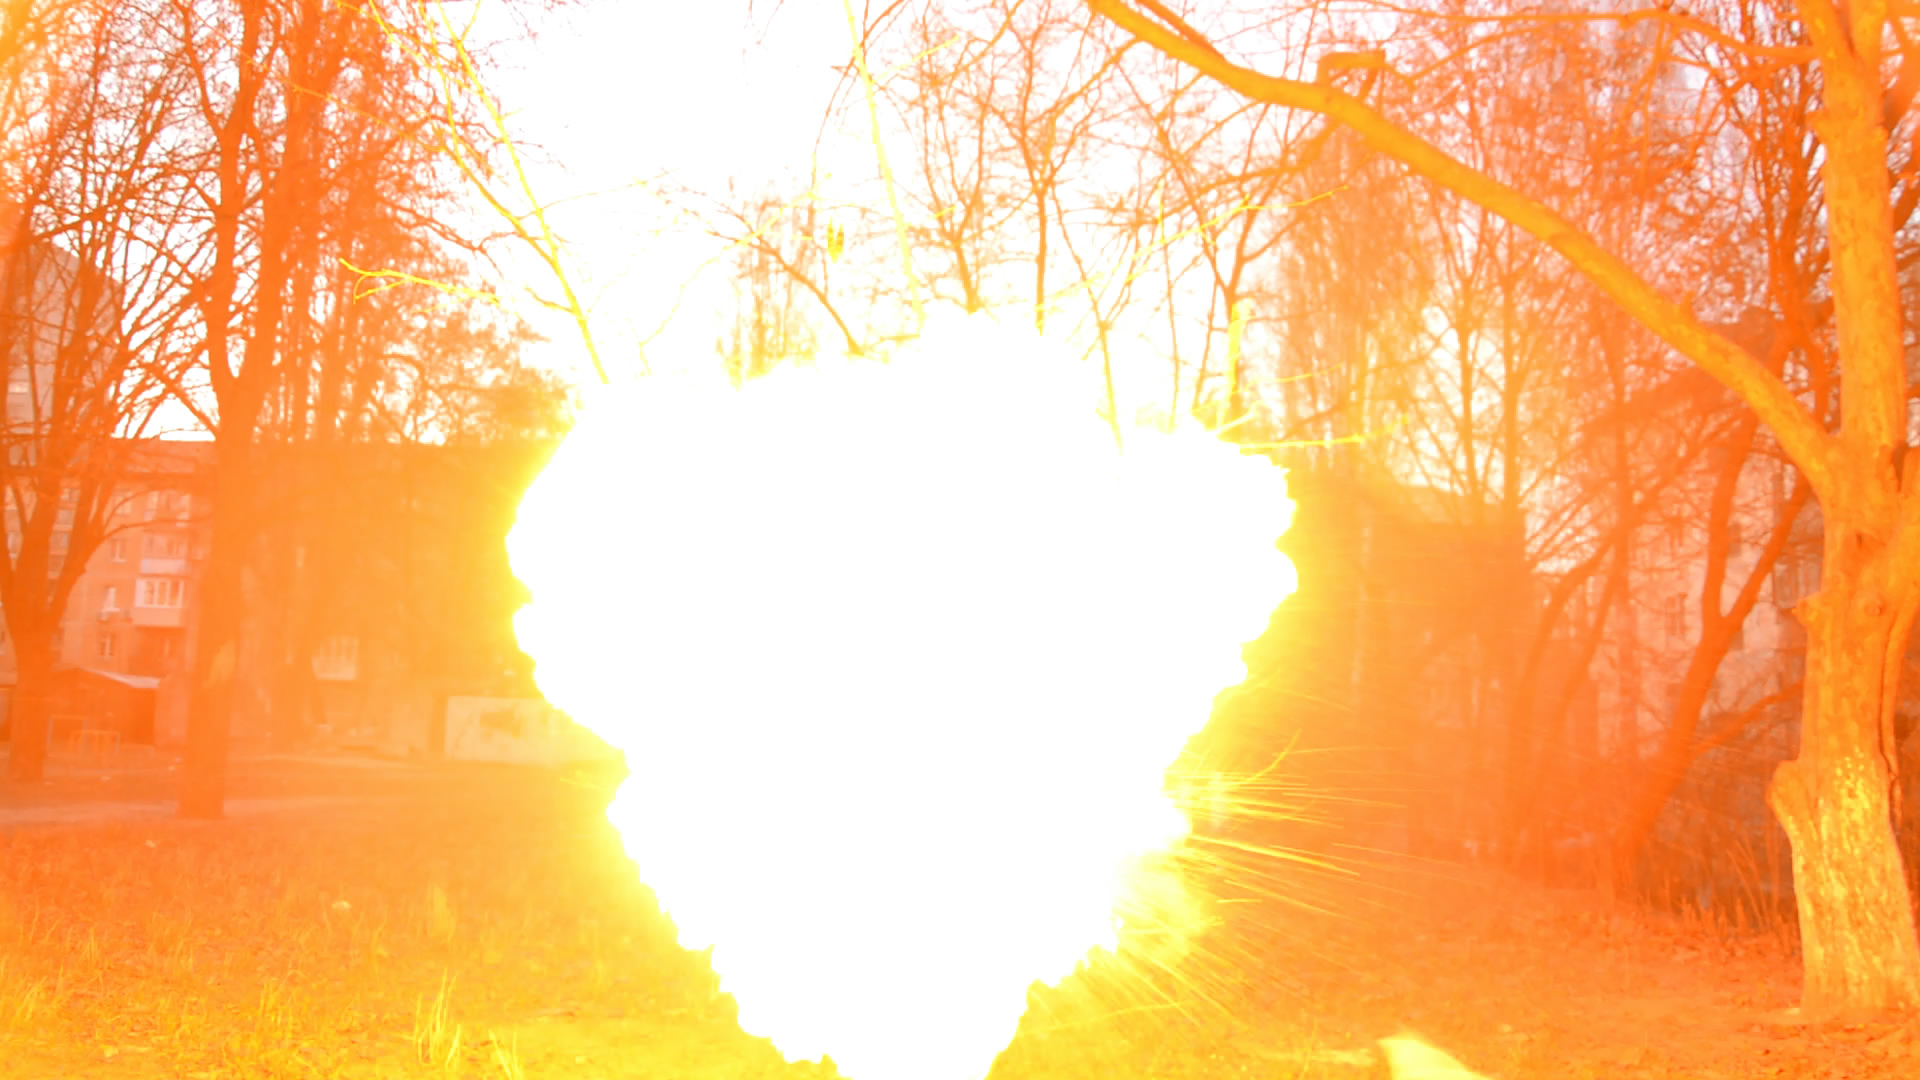 Смесь ацетилен-воздух (взрыв воздушного шарика). Mixture of Acetylene and Air (Explosion of Toy Balloon)